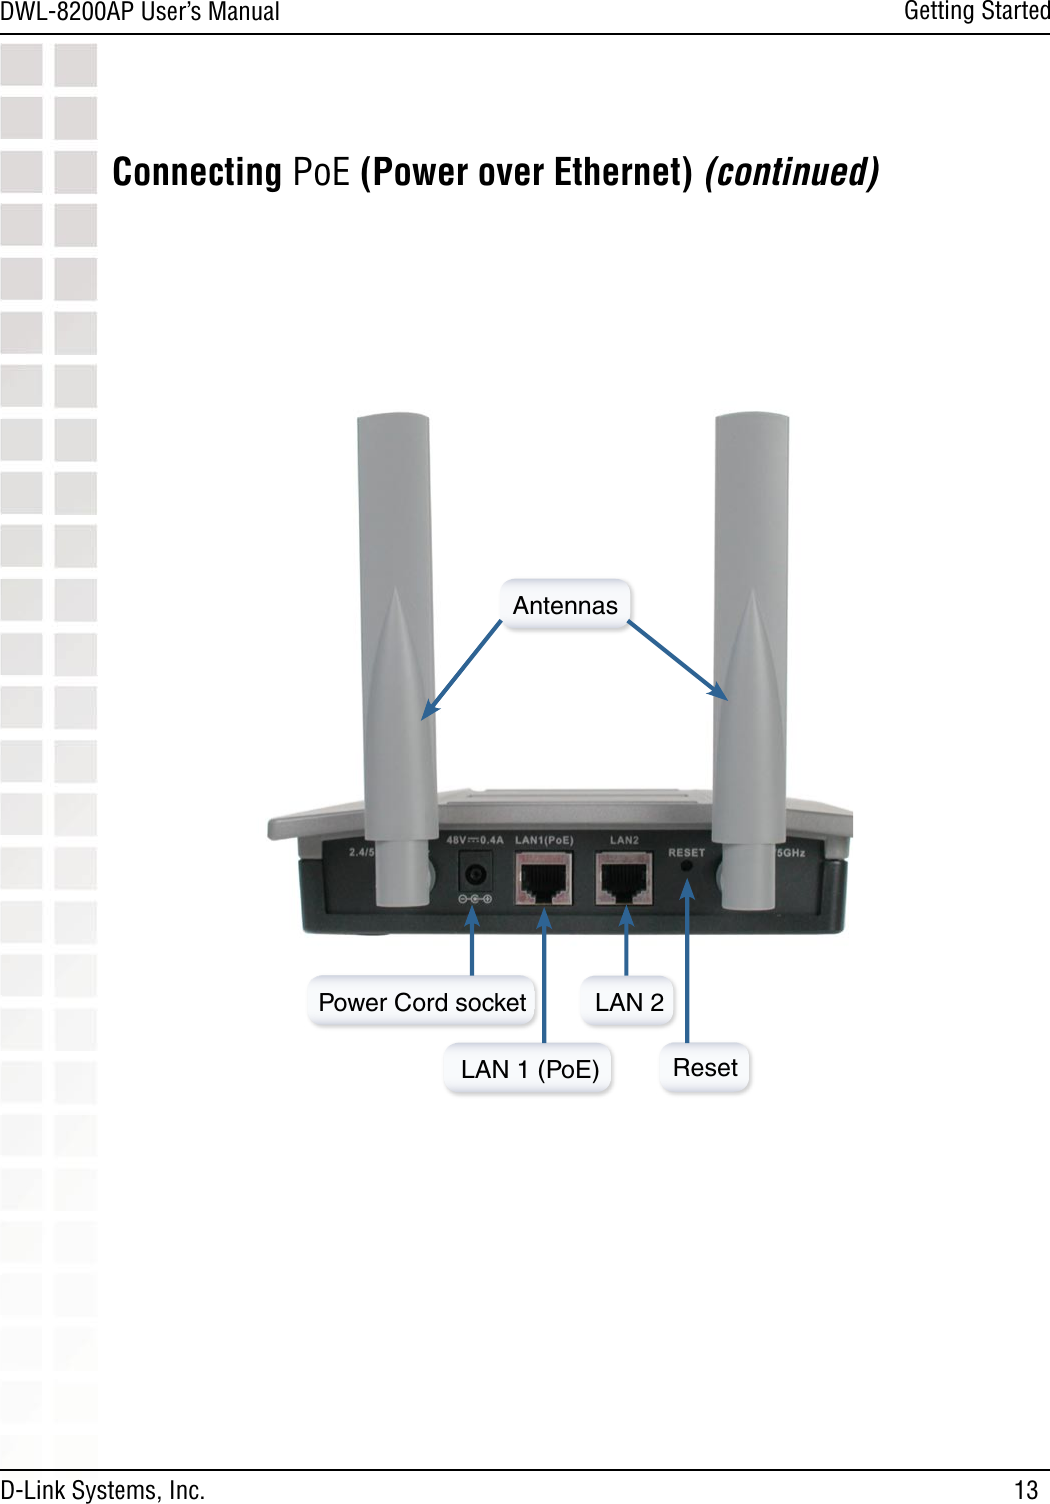 13DWL-8200AP User’s ManualD-Link Systems, Inc.Getting StartedPower Cord socketLAN 1 (PoE)AntennasLAN 2ResetConnecting PoE (Power over Ethernet) (continued)